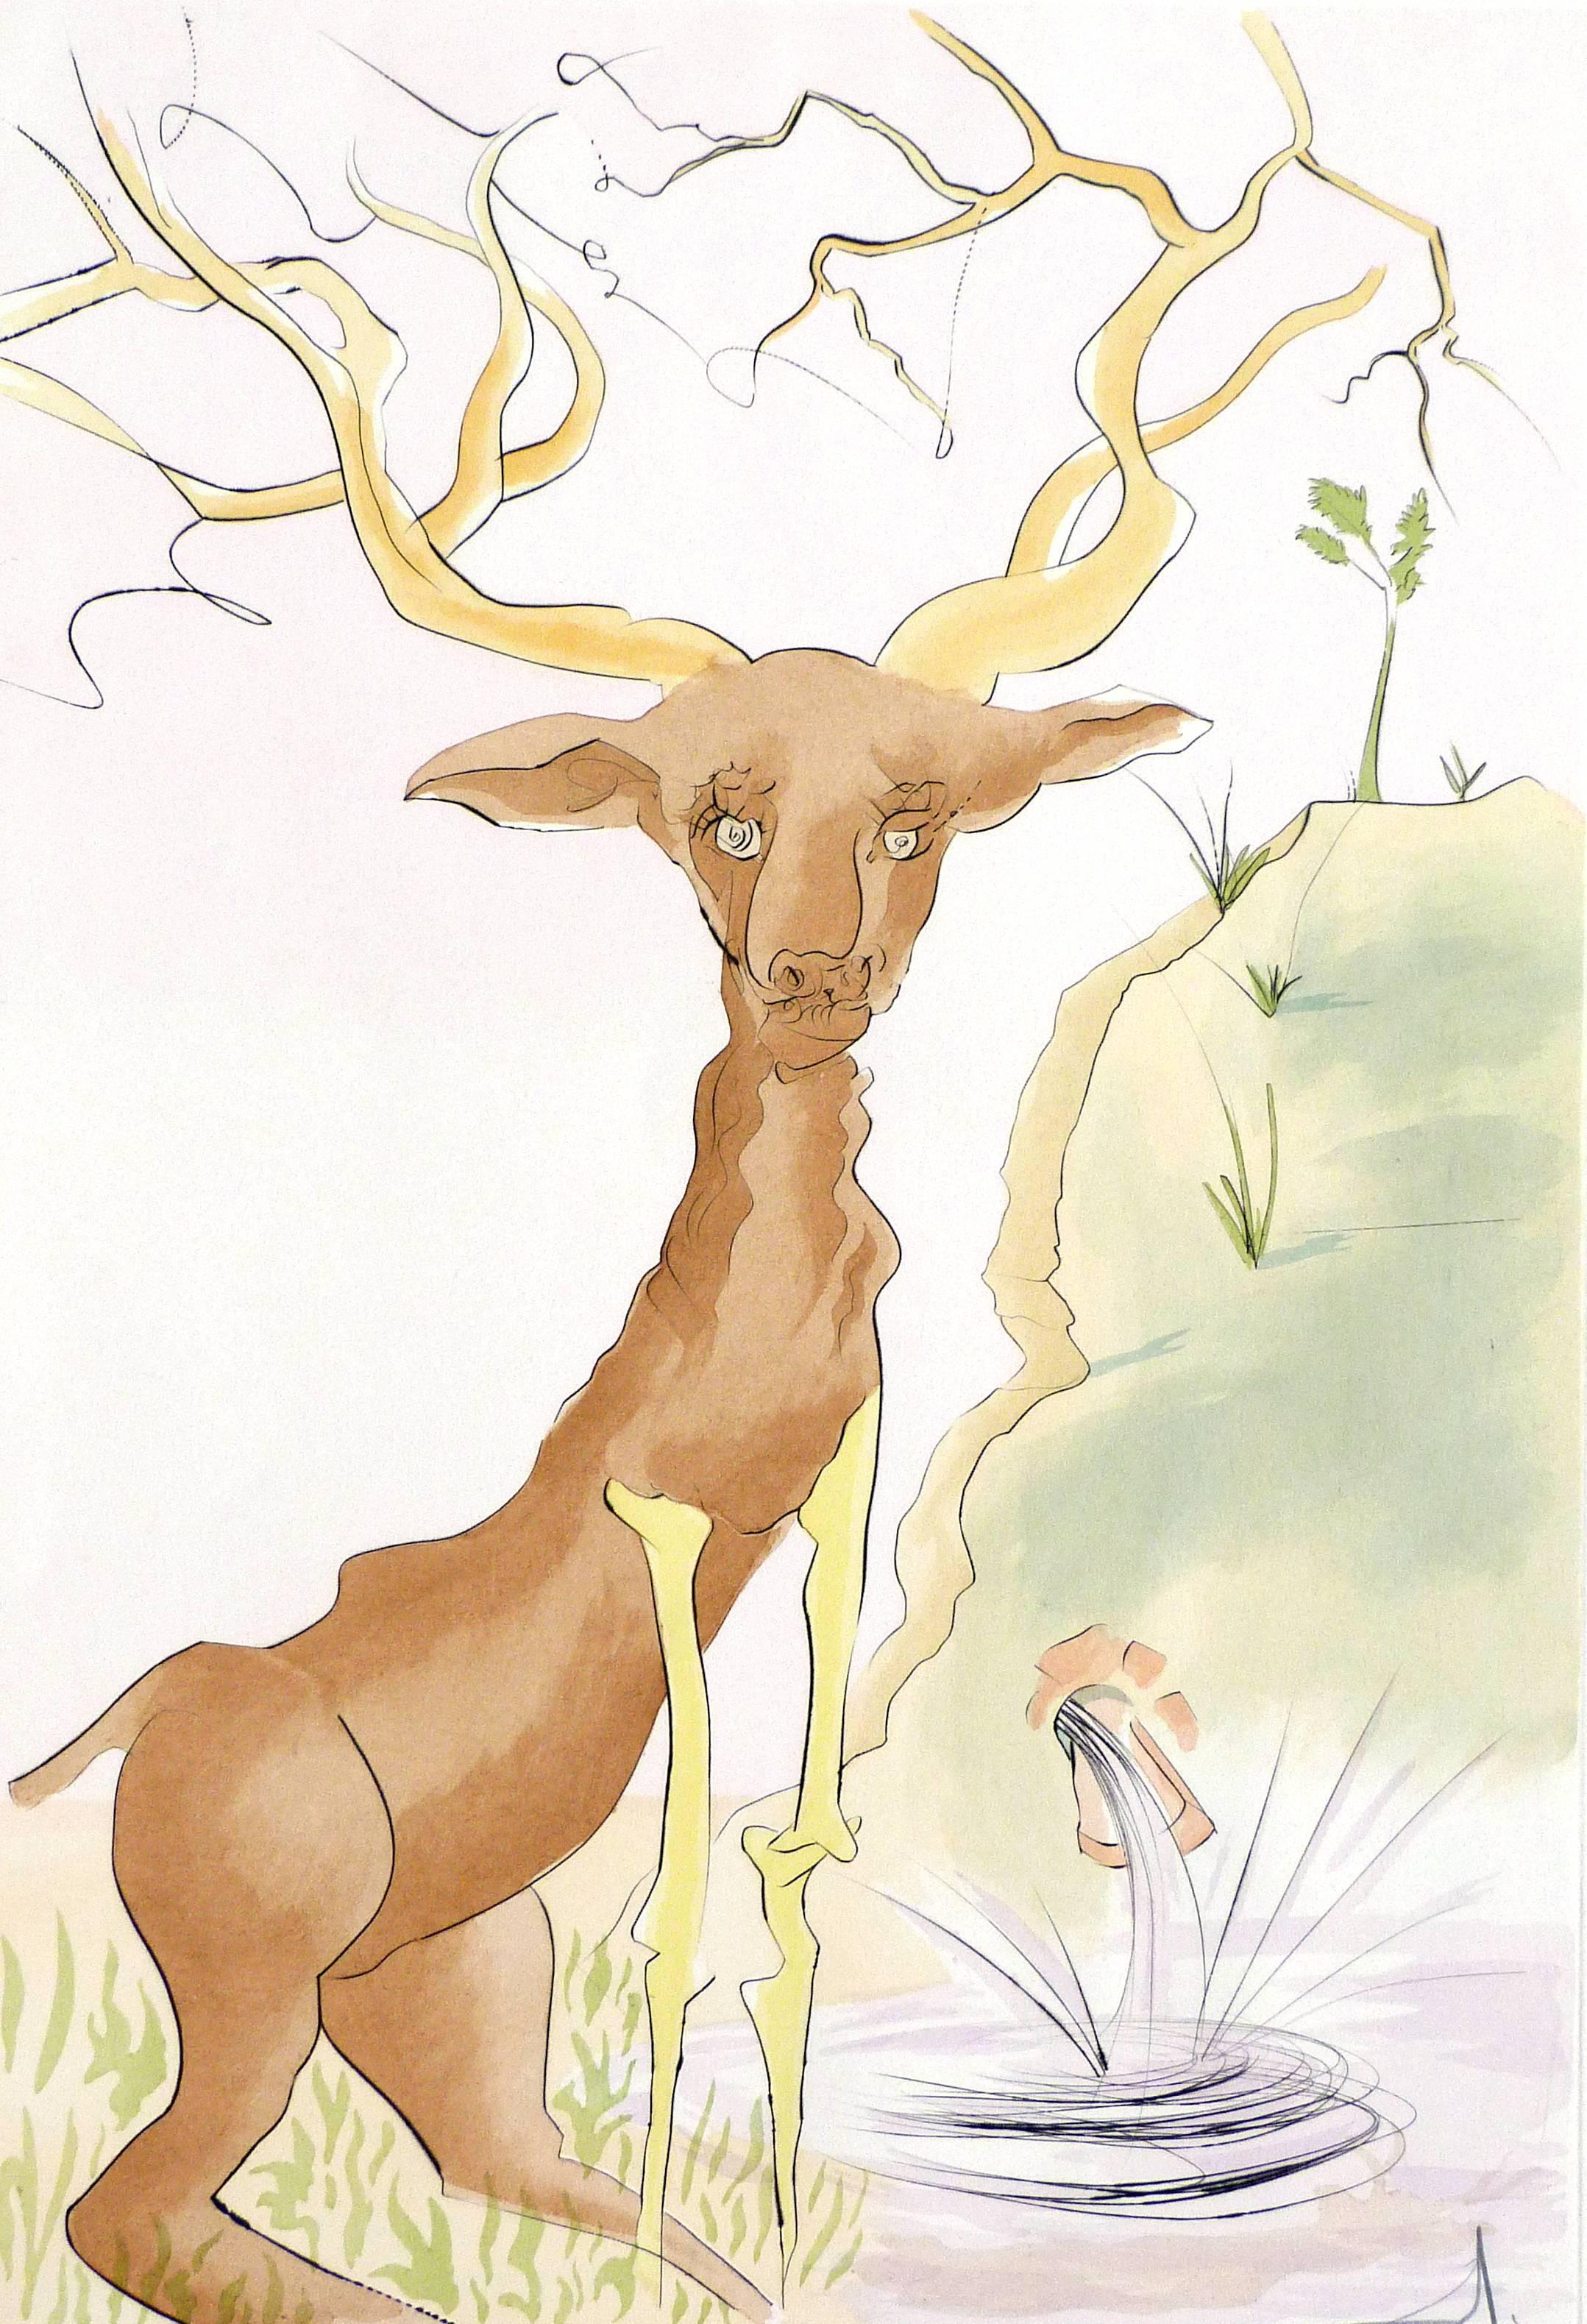 Salvador Dalí Animal Print - The surrealitst deer and his bone-shaped legs